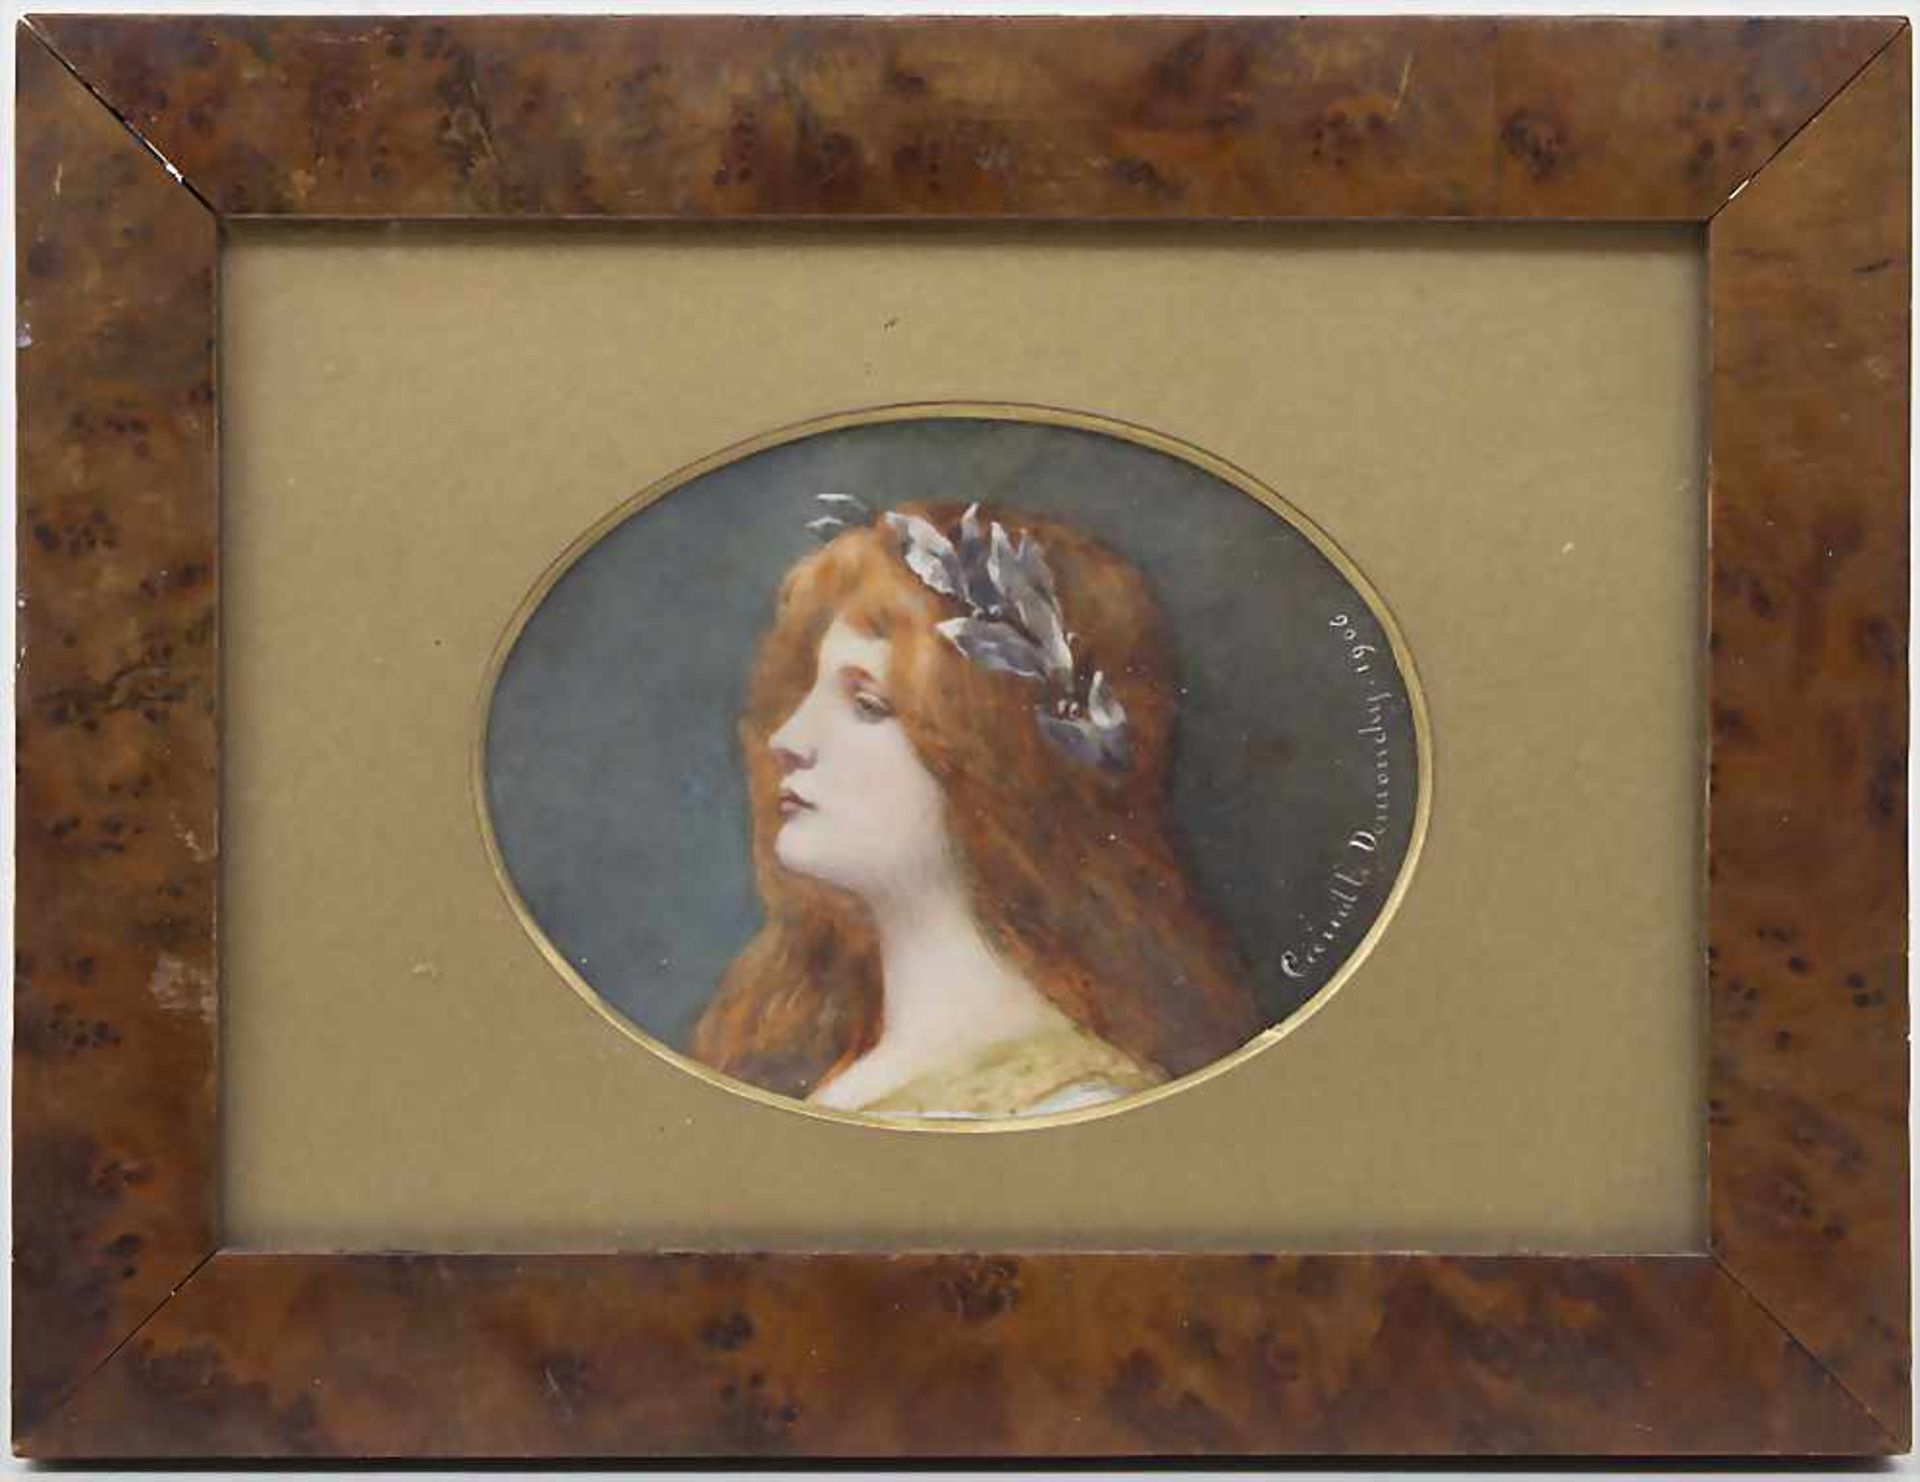 Jugendstil / Präraffaeliten Miniatur einer jungen Frau / An Art Nouveau / Pre Raphaelite miniture - Image 2 of 5